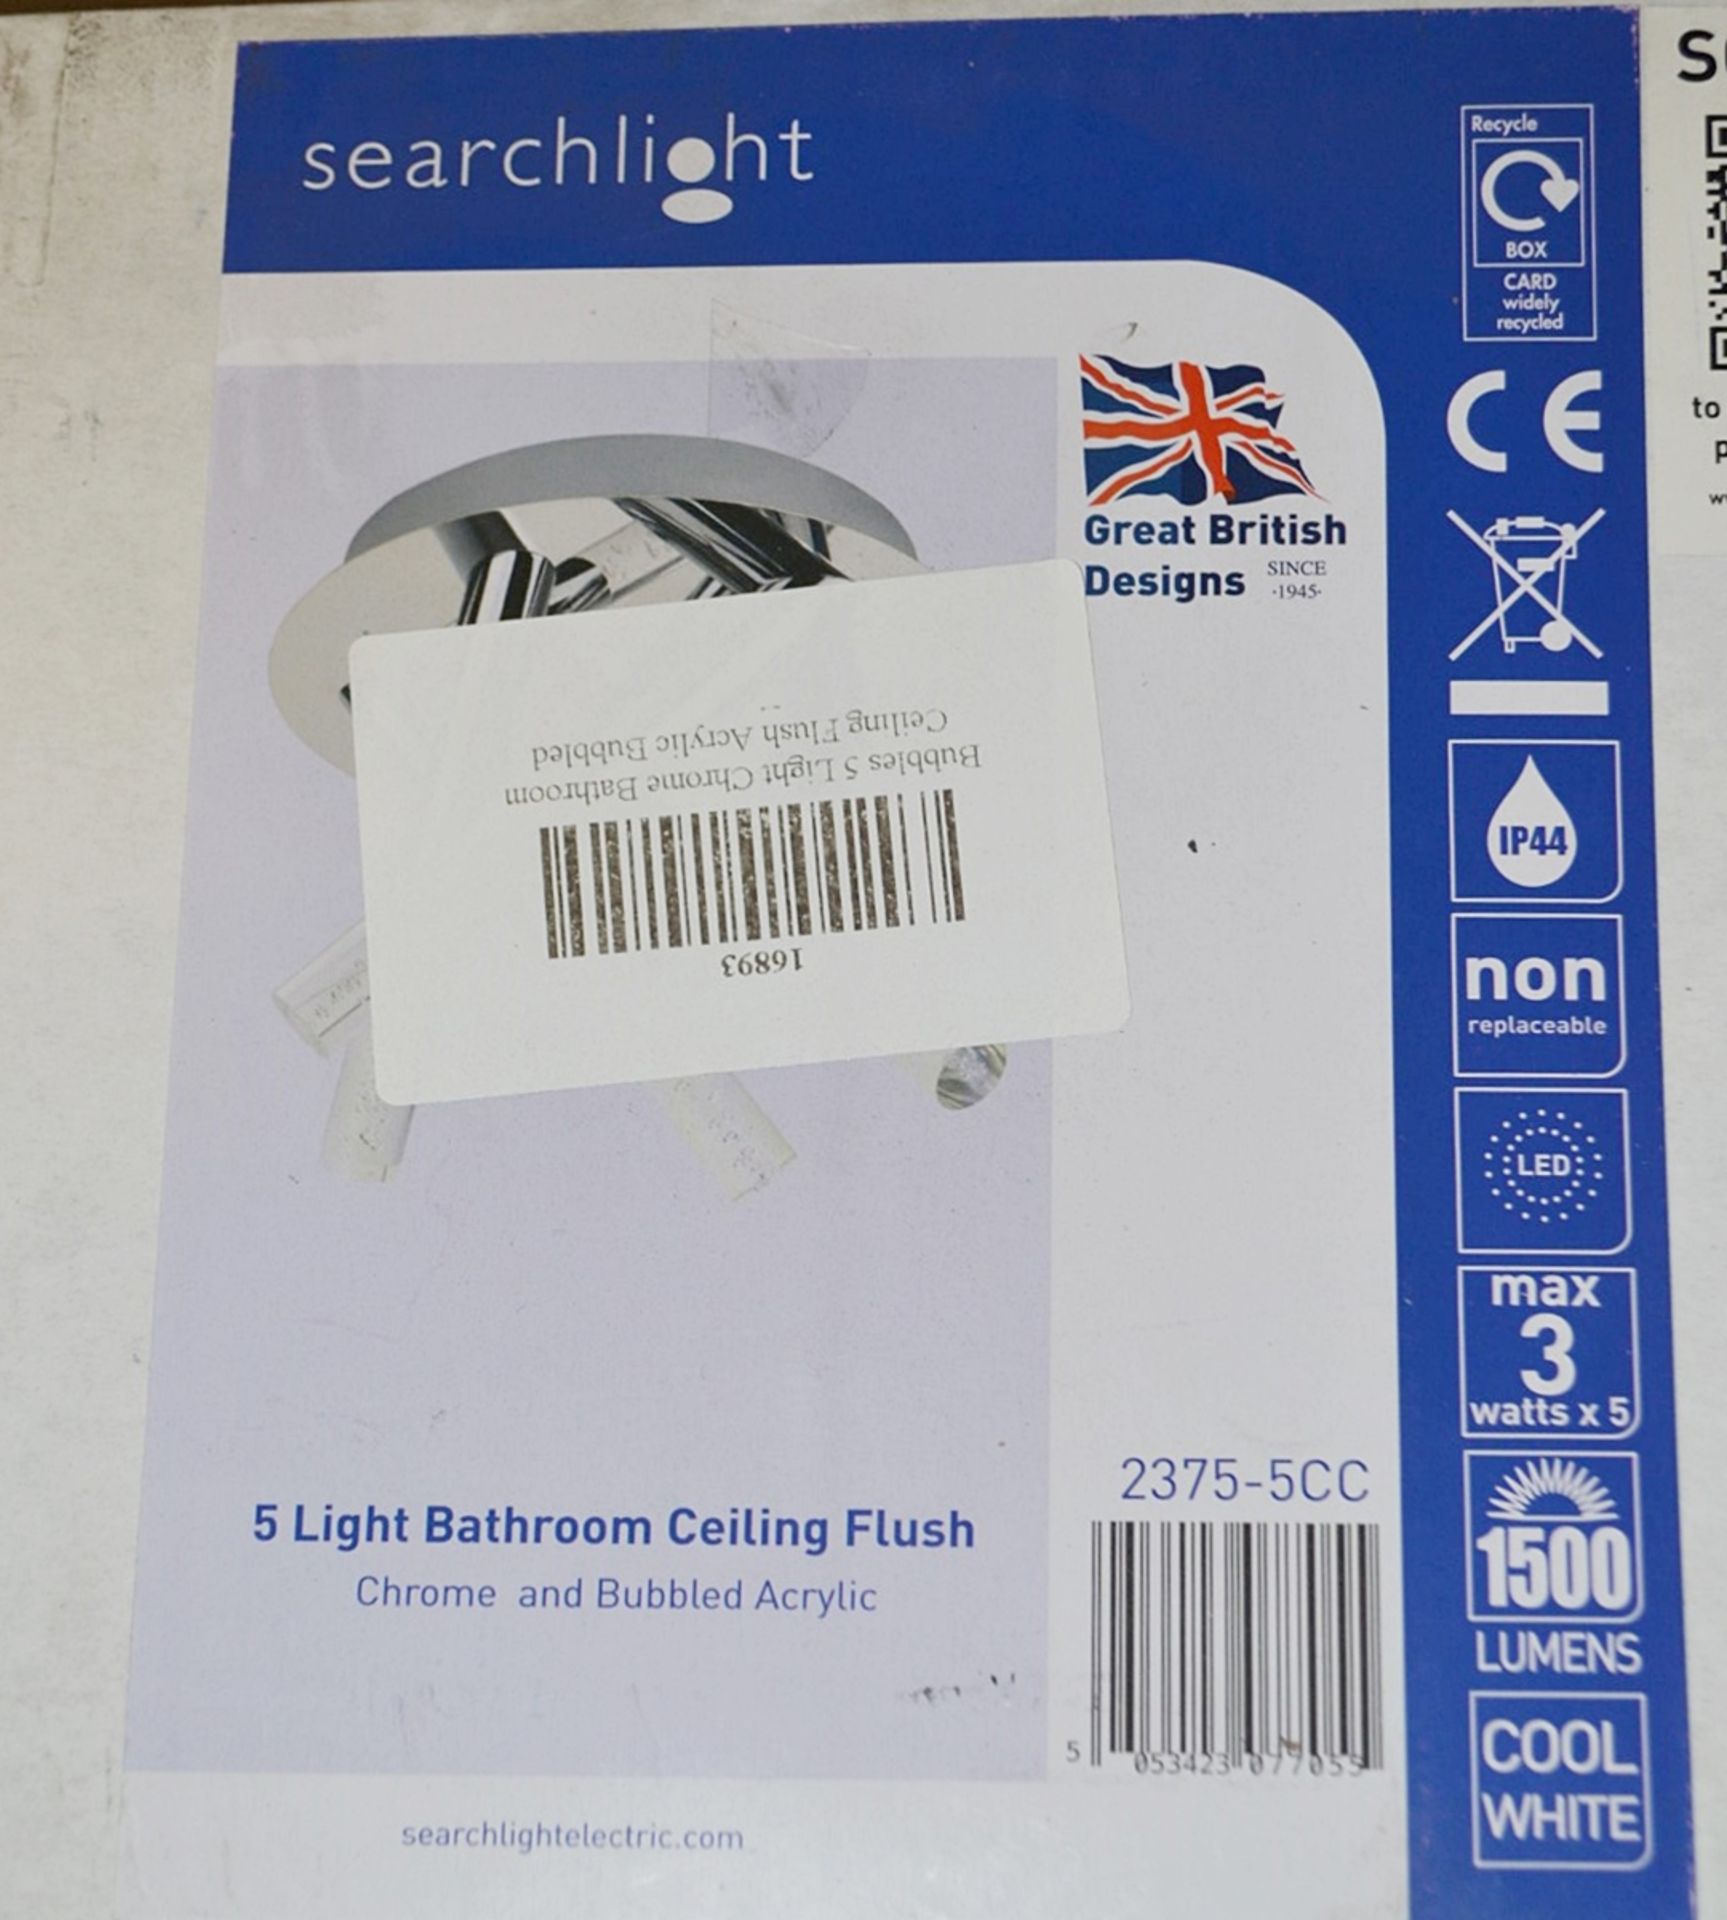 5 x Searchlight 5-Light Bathroom Ceiling Flush with Bubbled Acrylic and Chrome Rods - 2375-5CC - Ne - Bild 3 aus 3